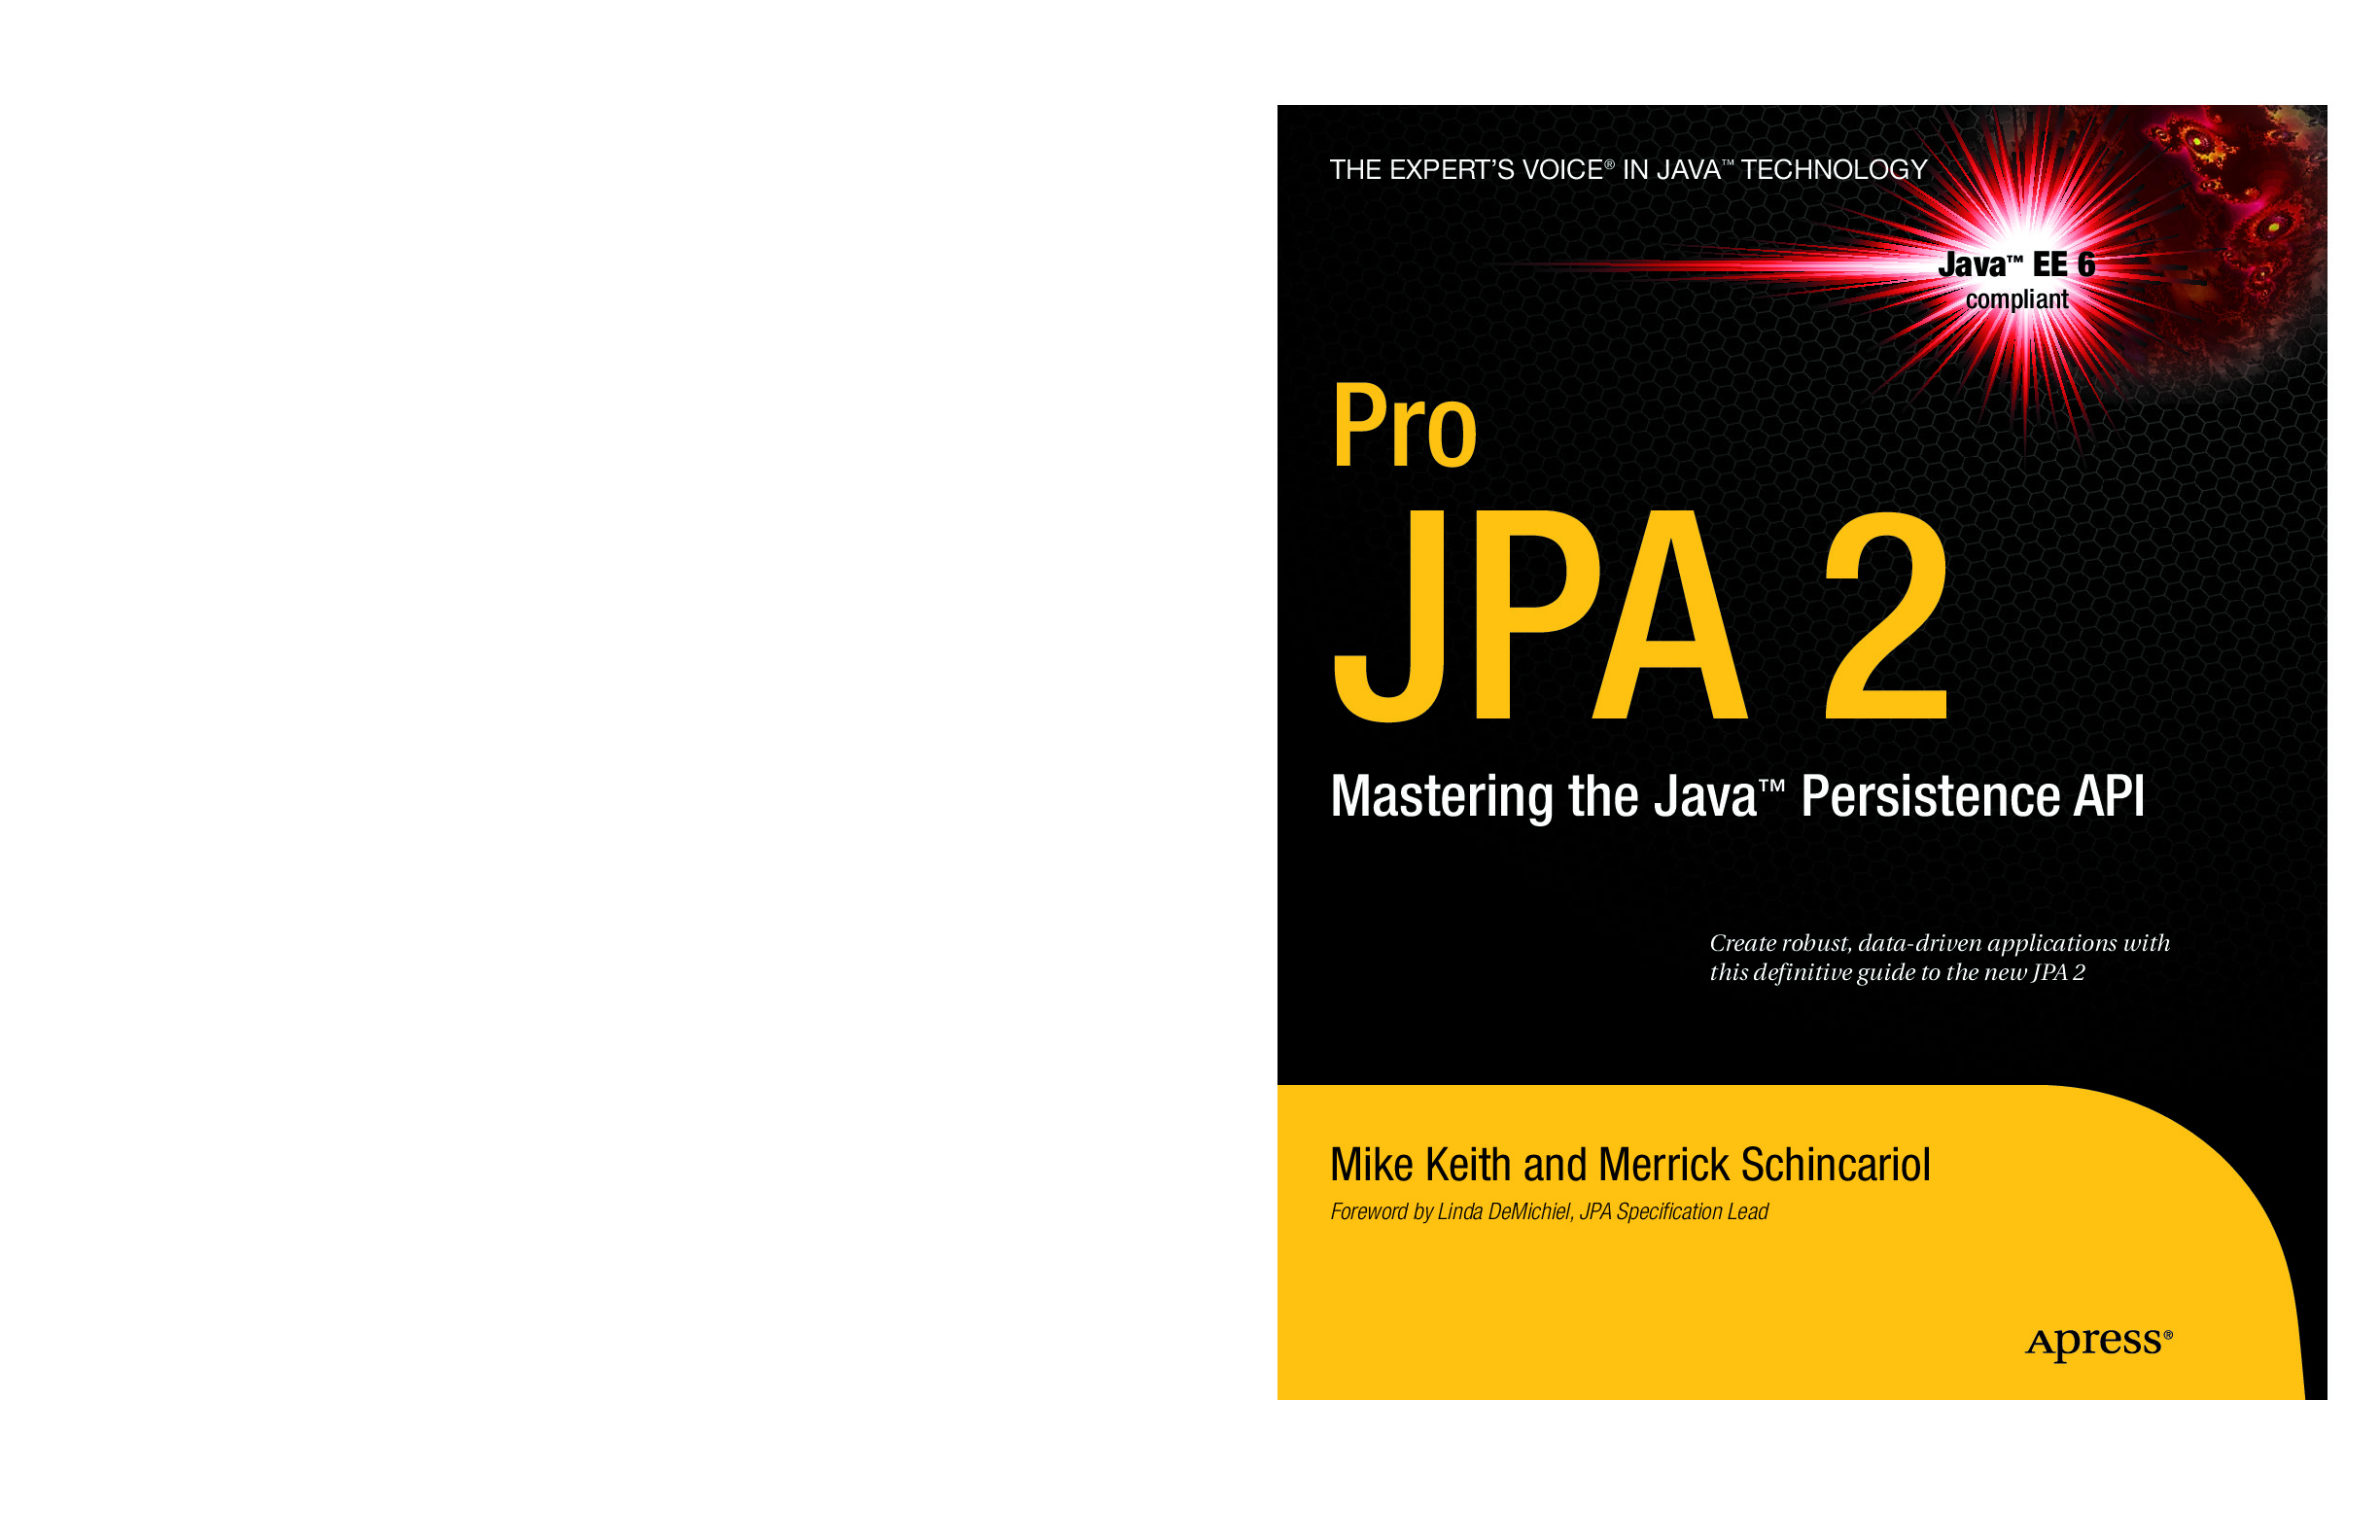 [JAVA][Pro JPA 2 – Mastering the Java Persistence API]